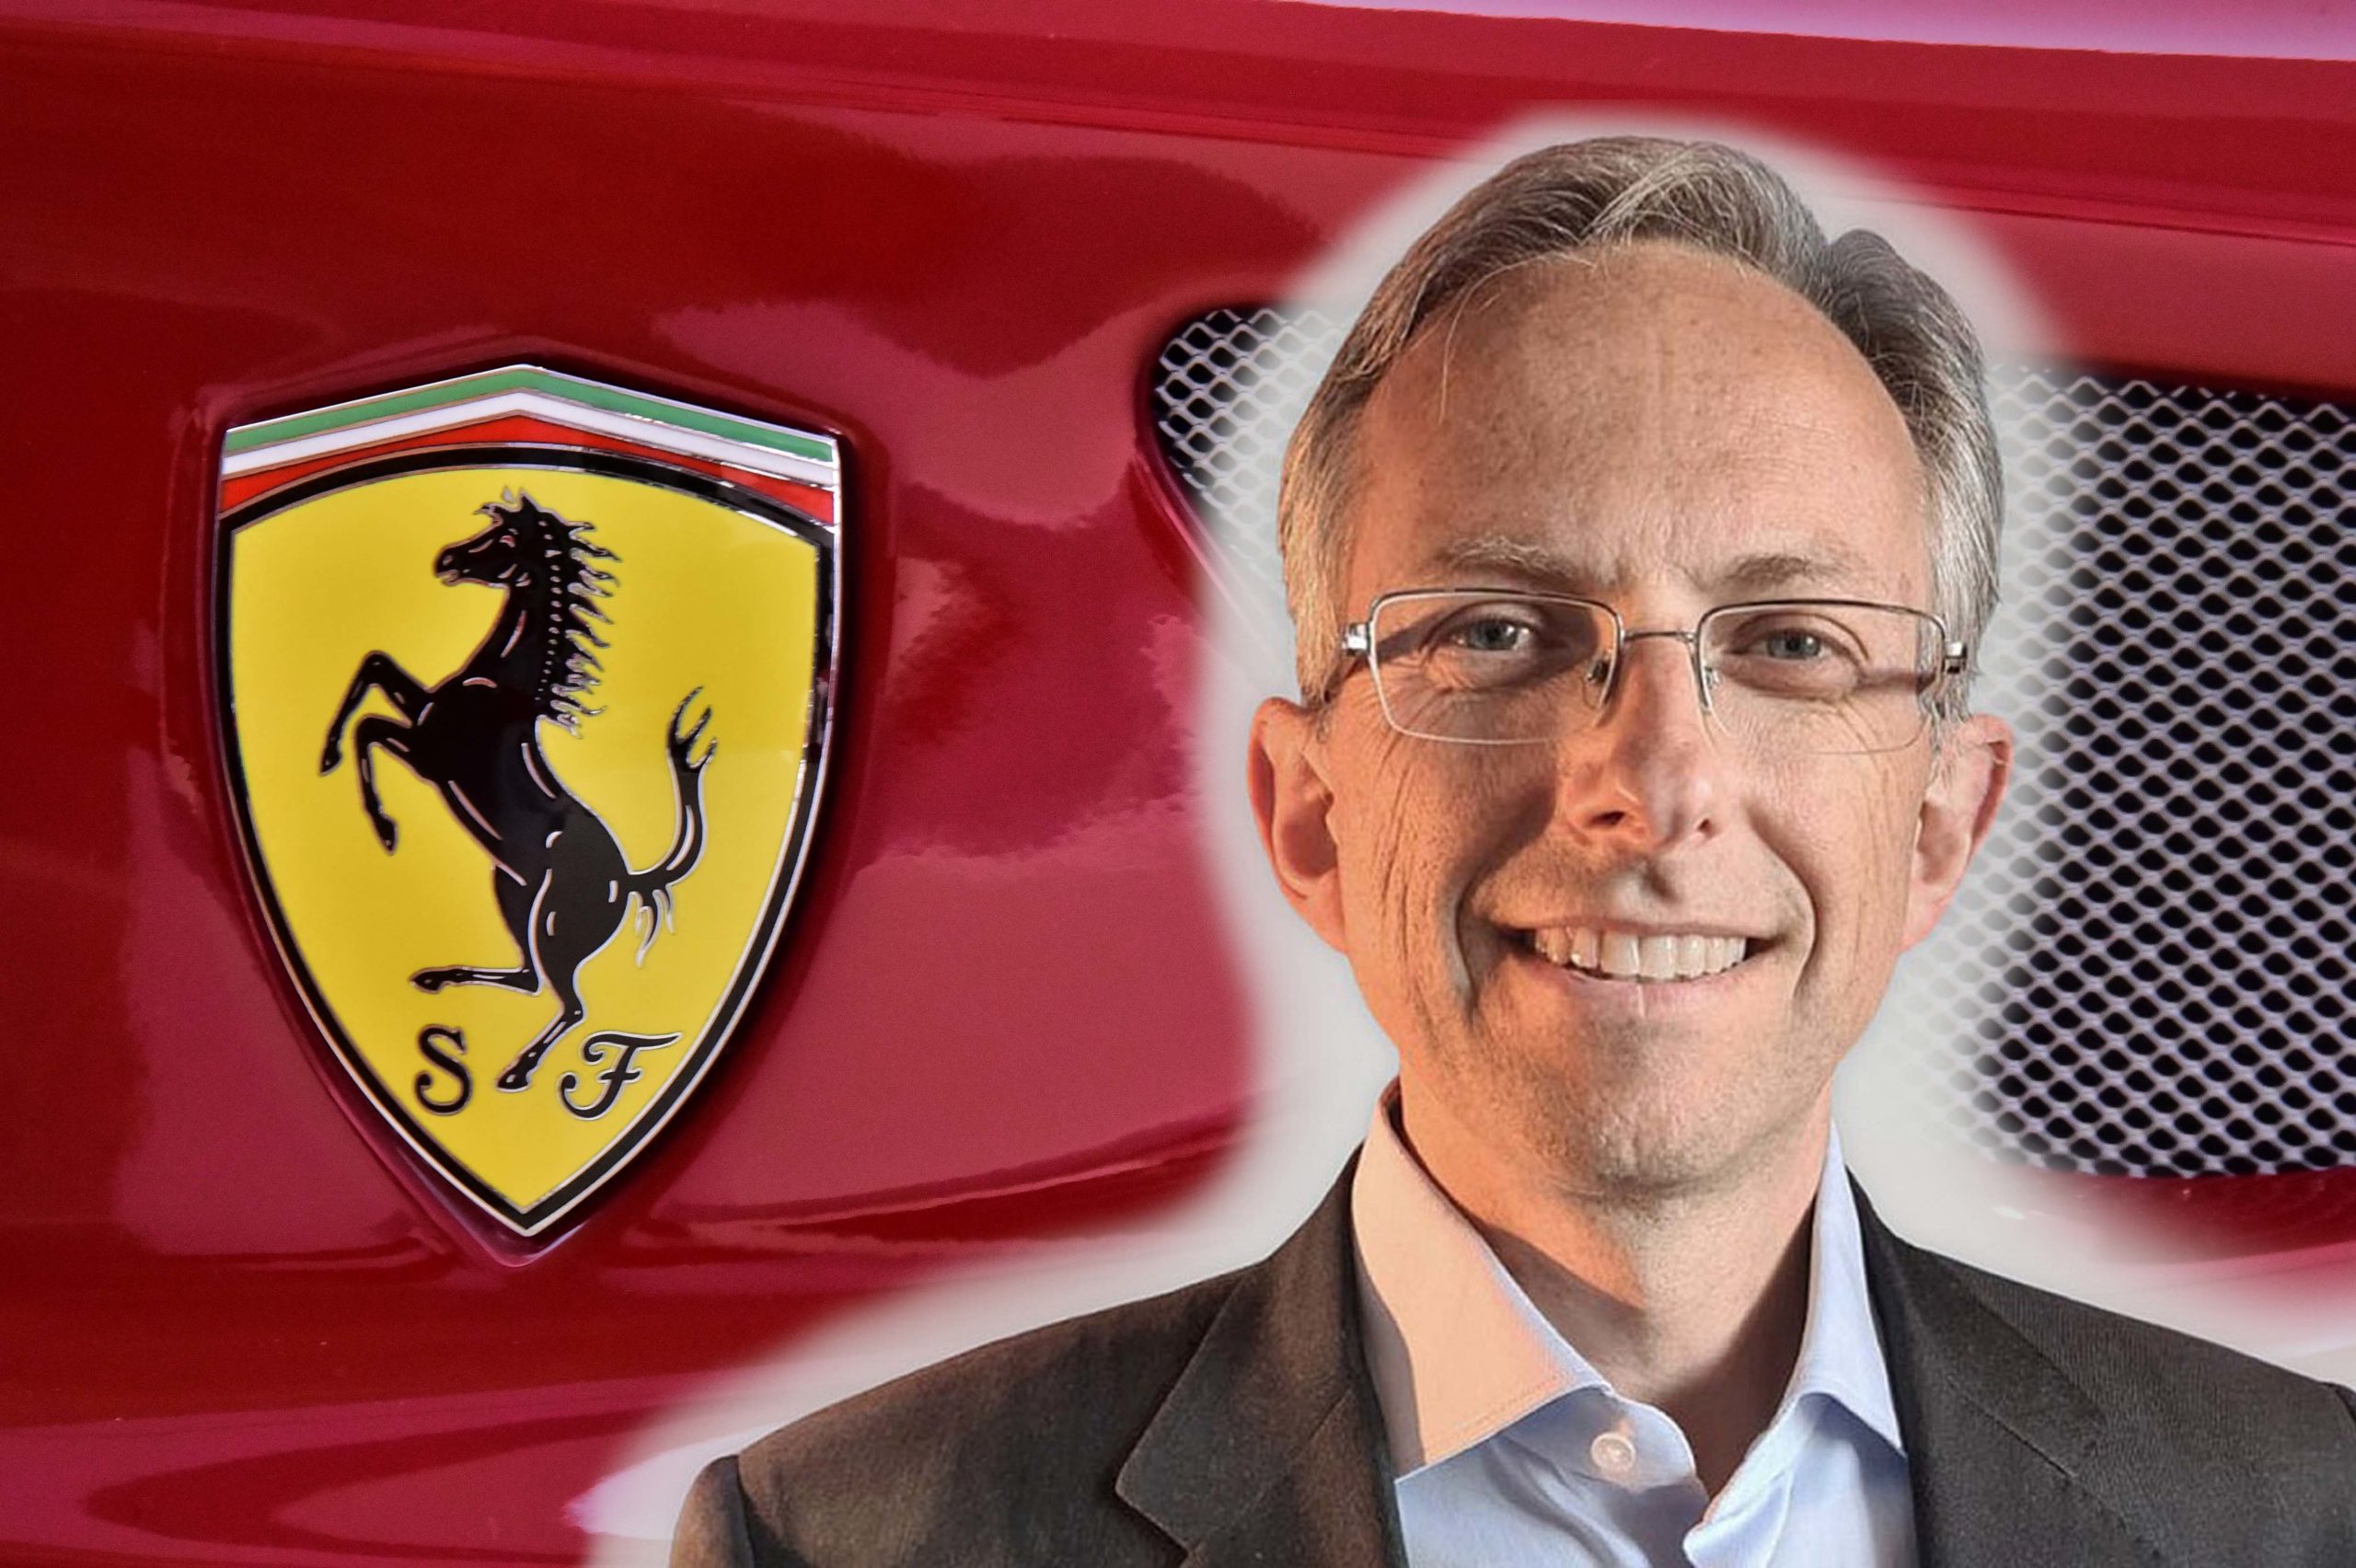 Ferrari benoemt technologie-expert Benedetto Vigna tot CEO